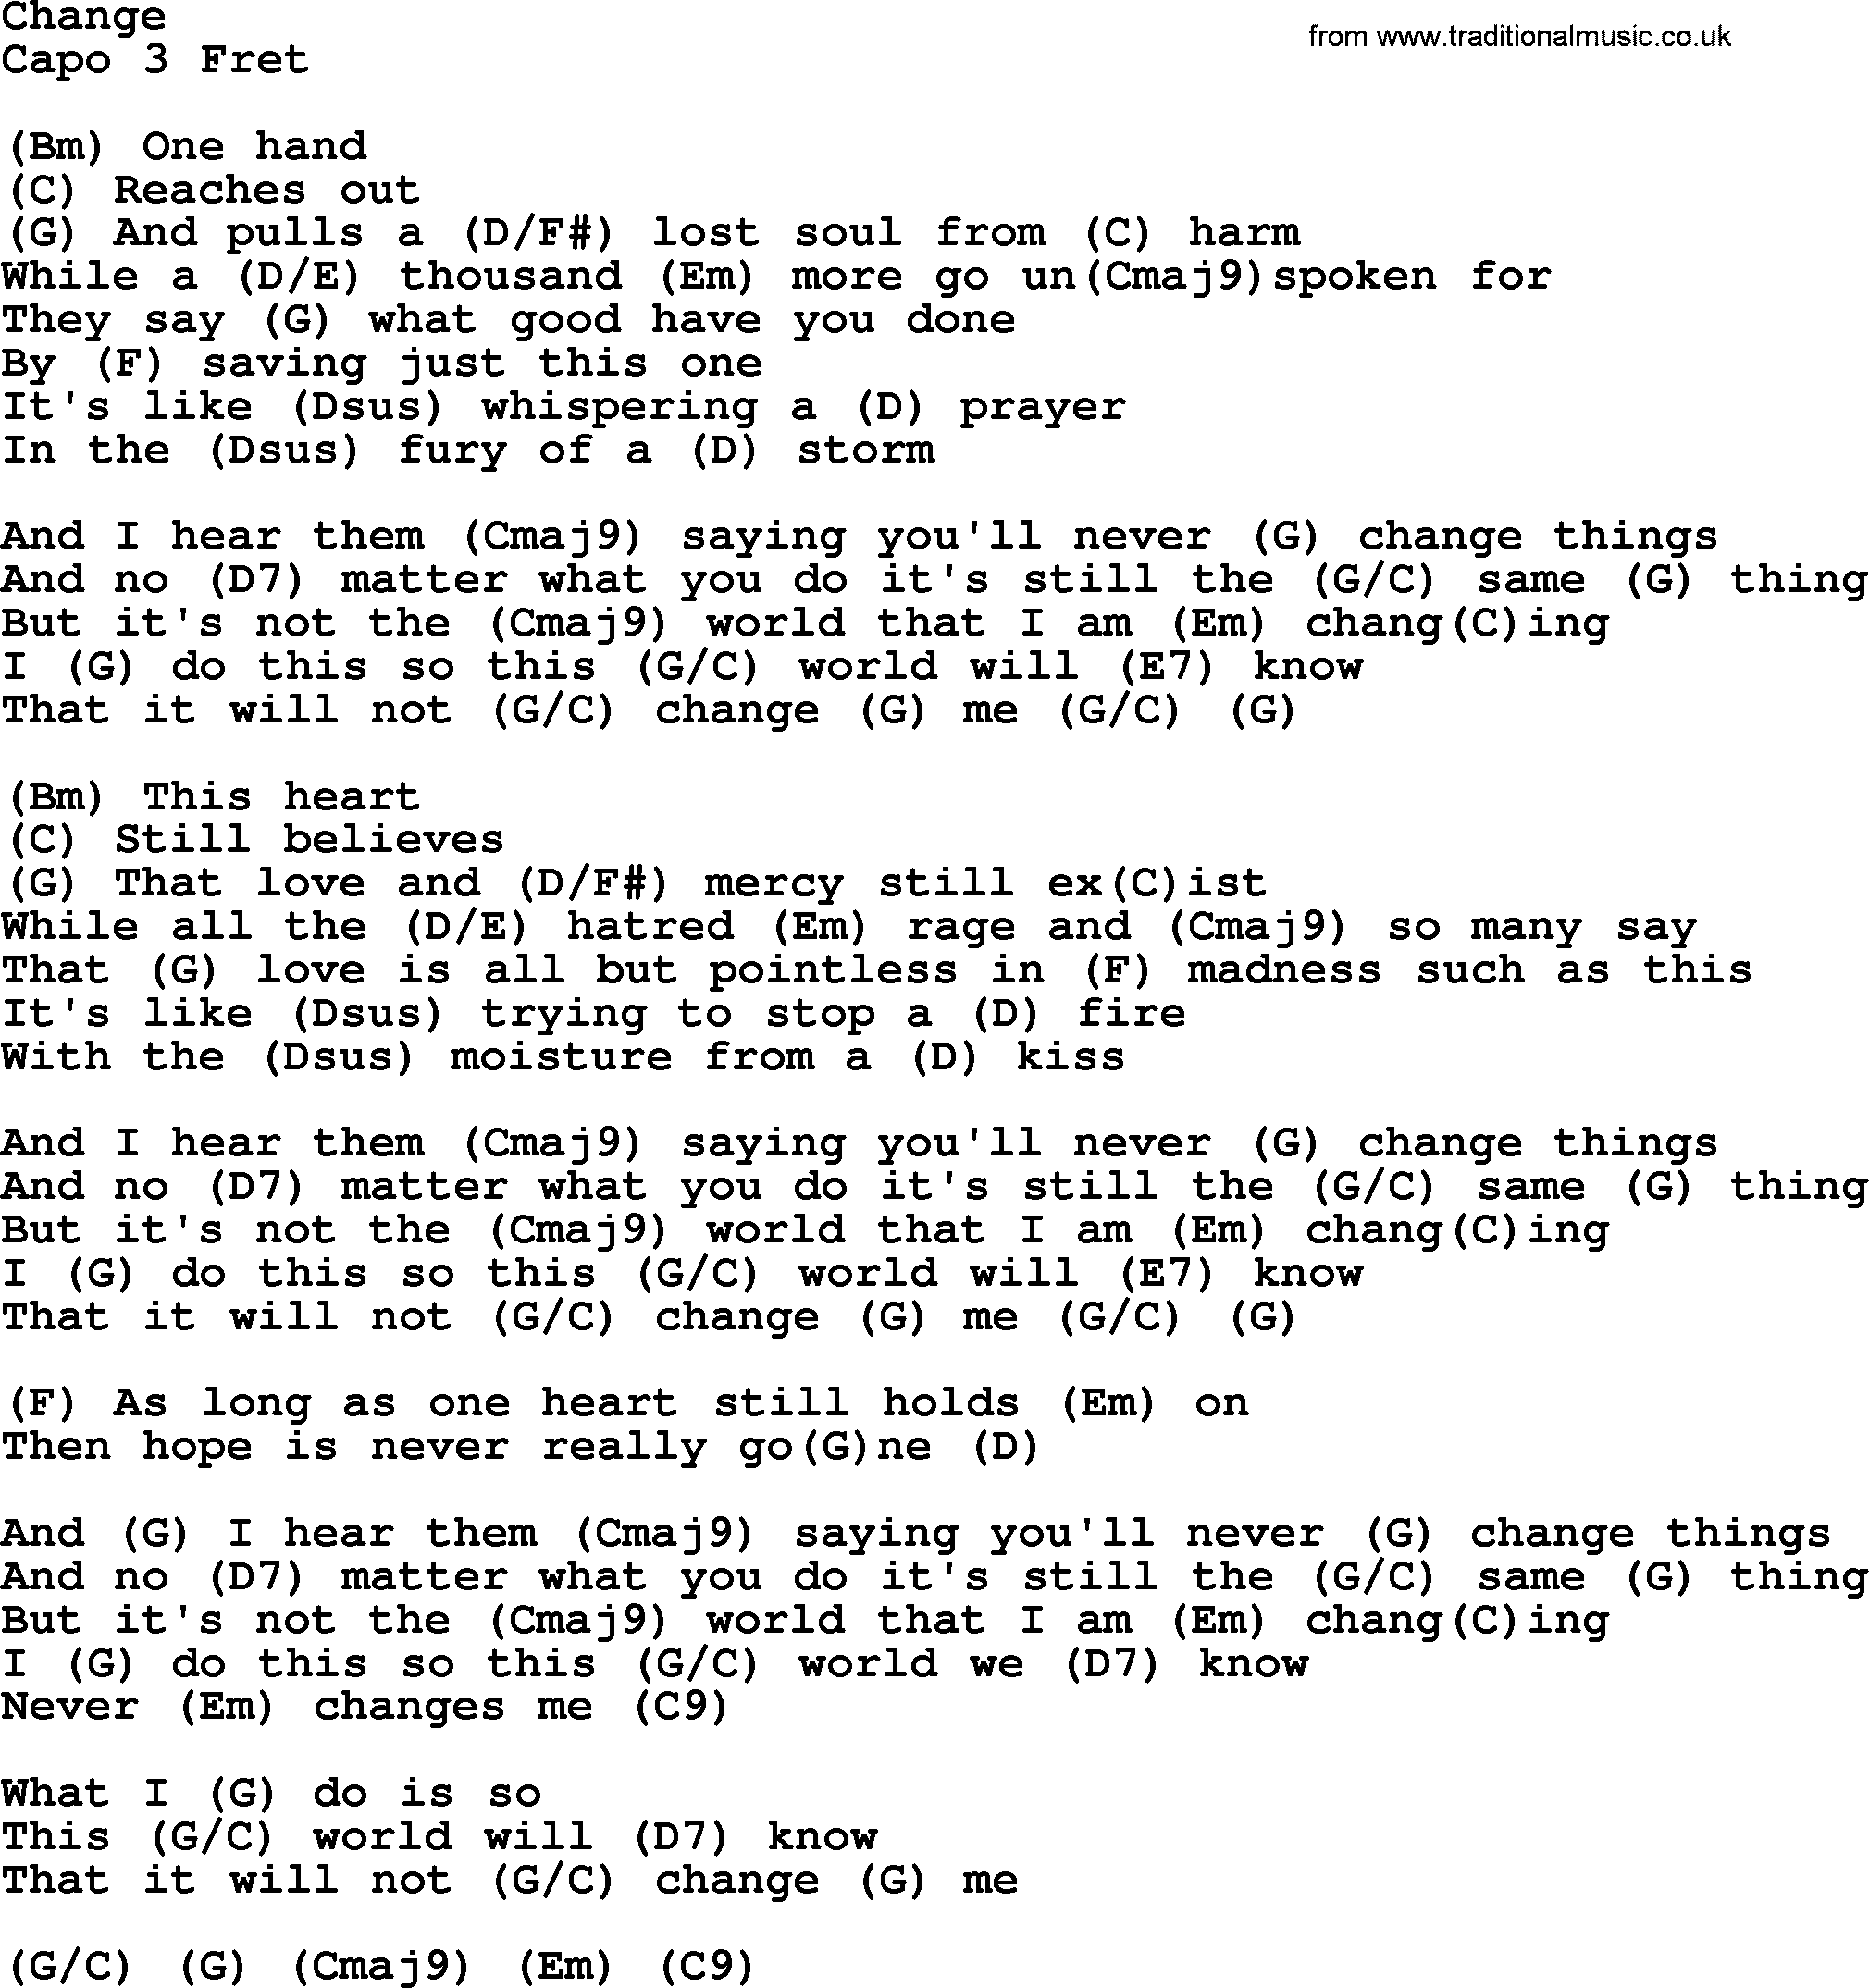 Garth Brooks song: Change, lyrics and chords